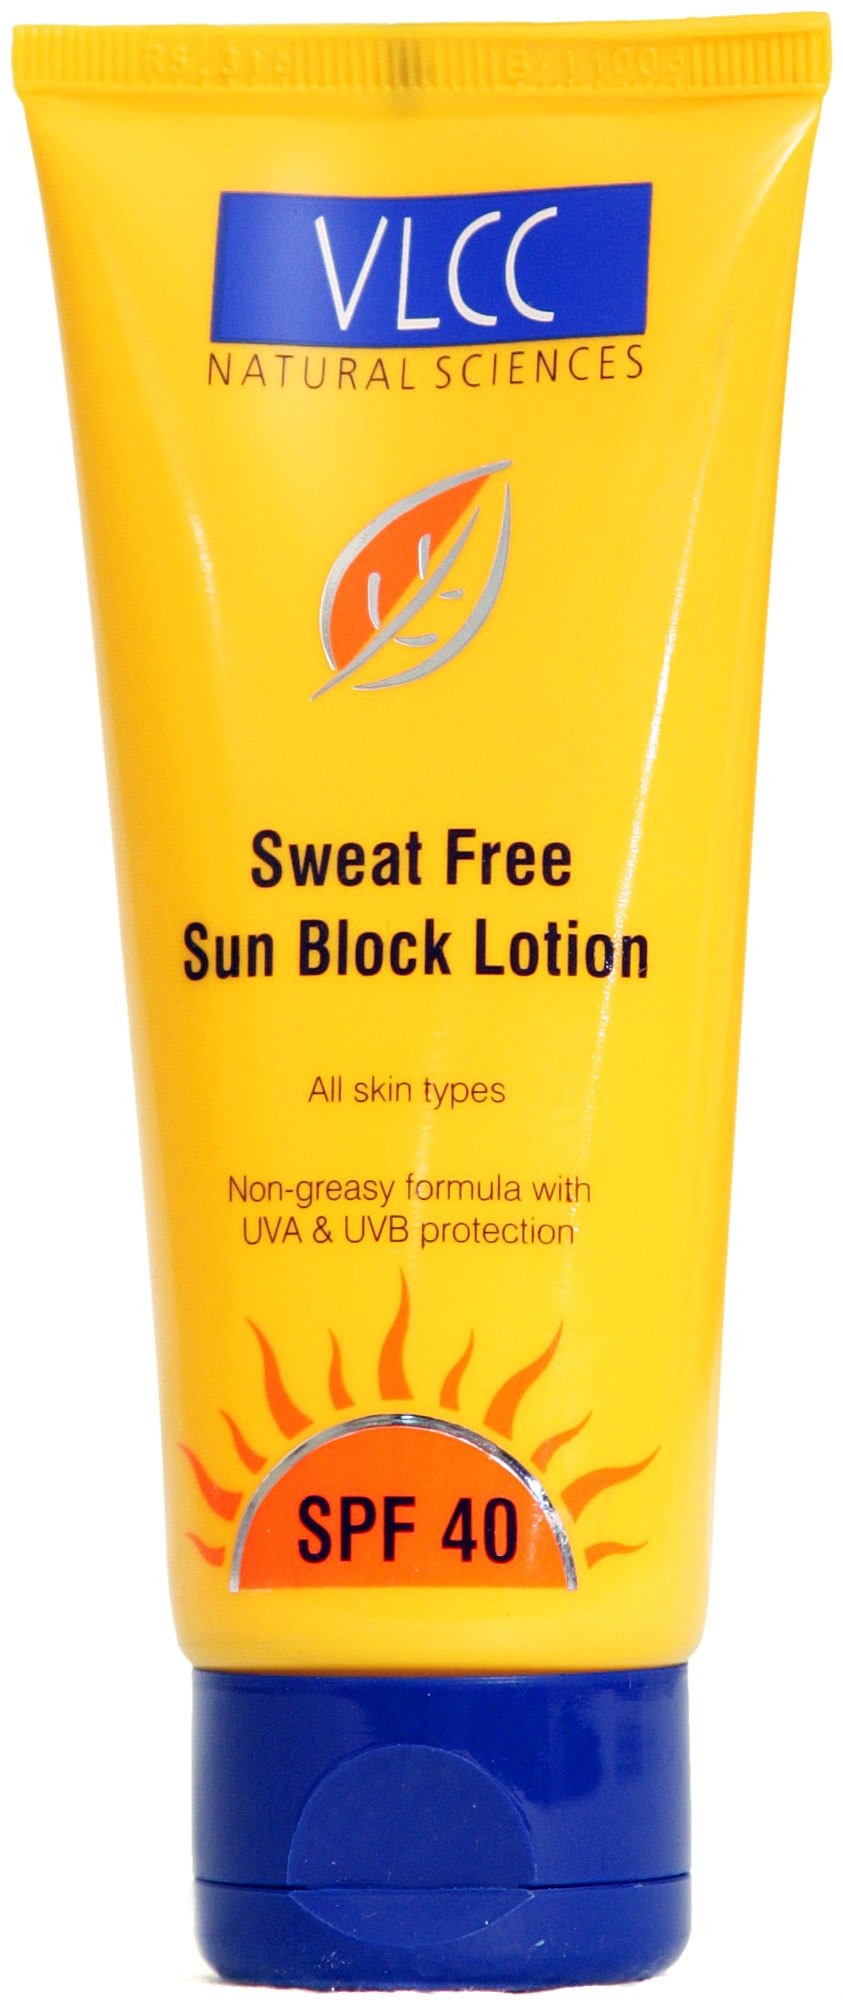 Sweat Free Sun Block Lotion - book cover